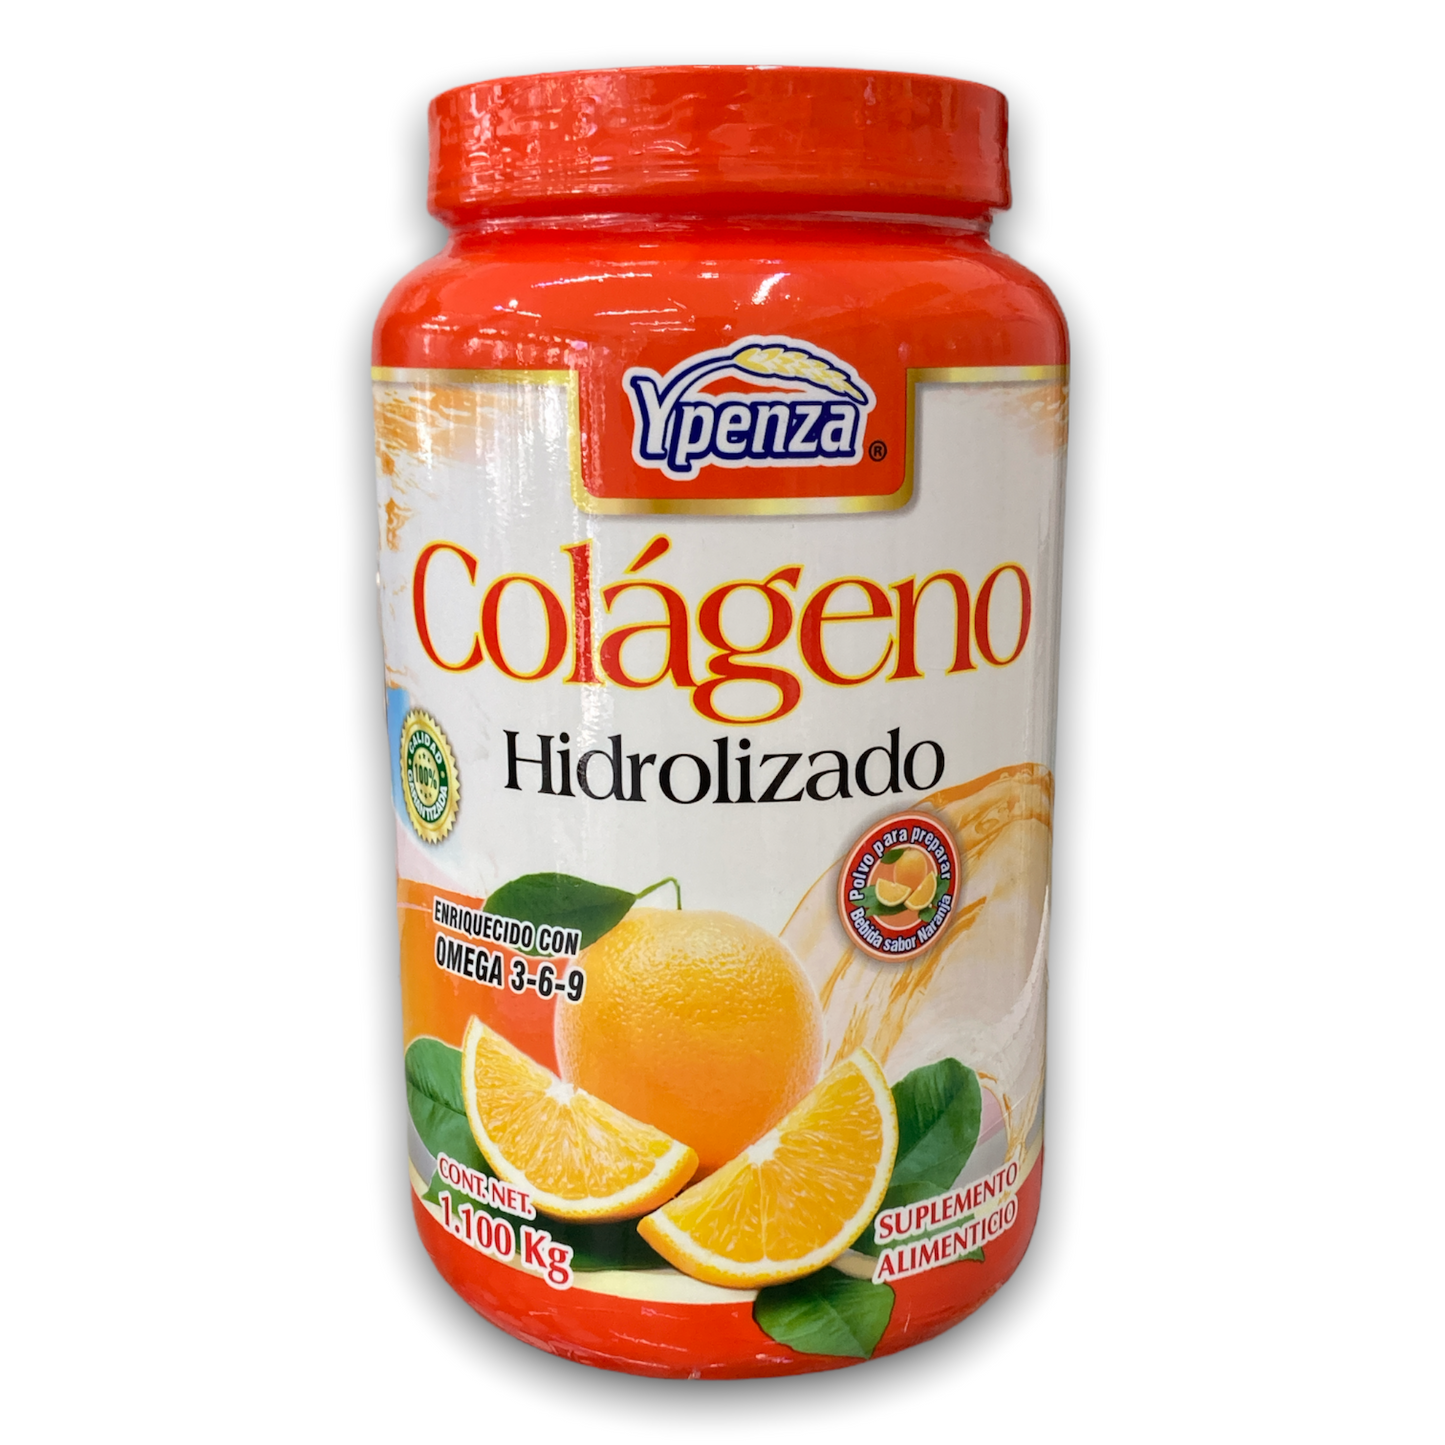 Colágeno Hidrolizado Naranja 1.1 kg Ypenza